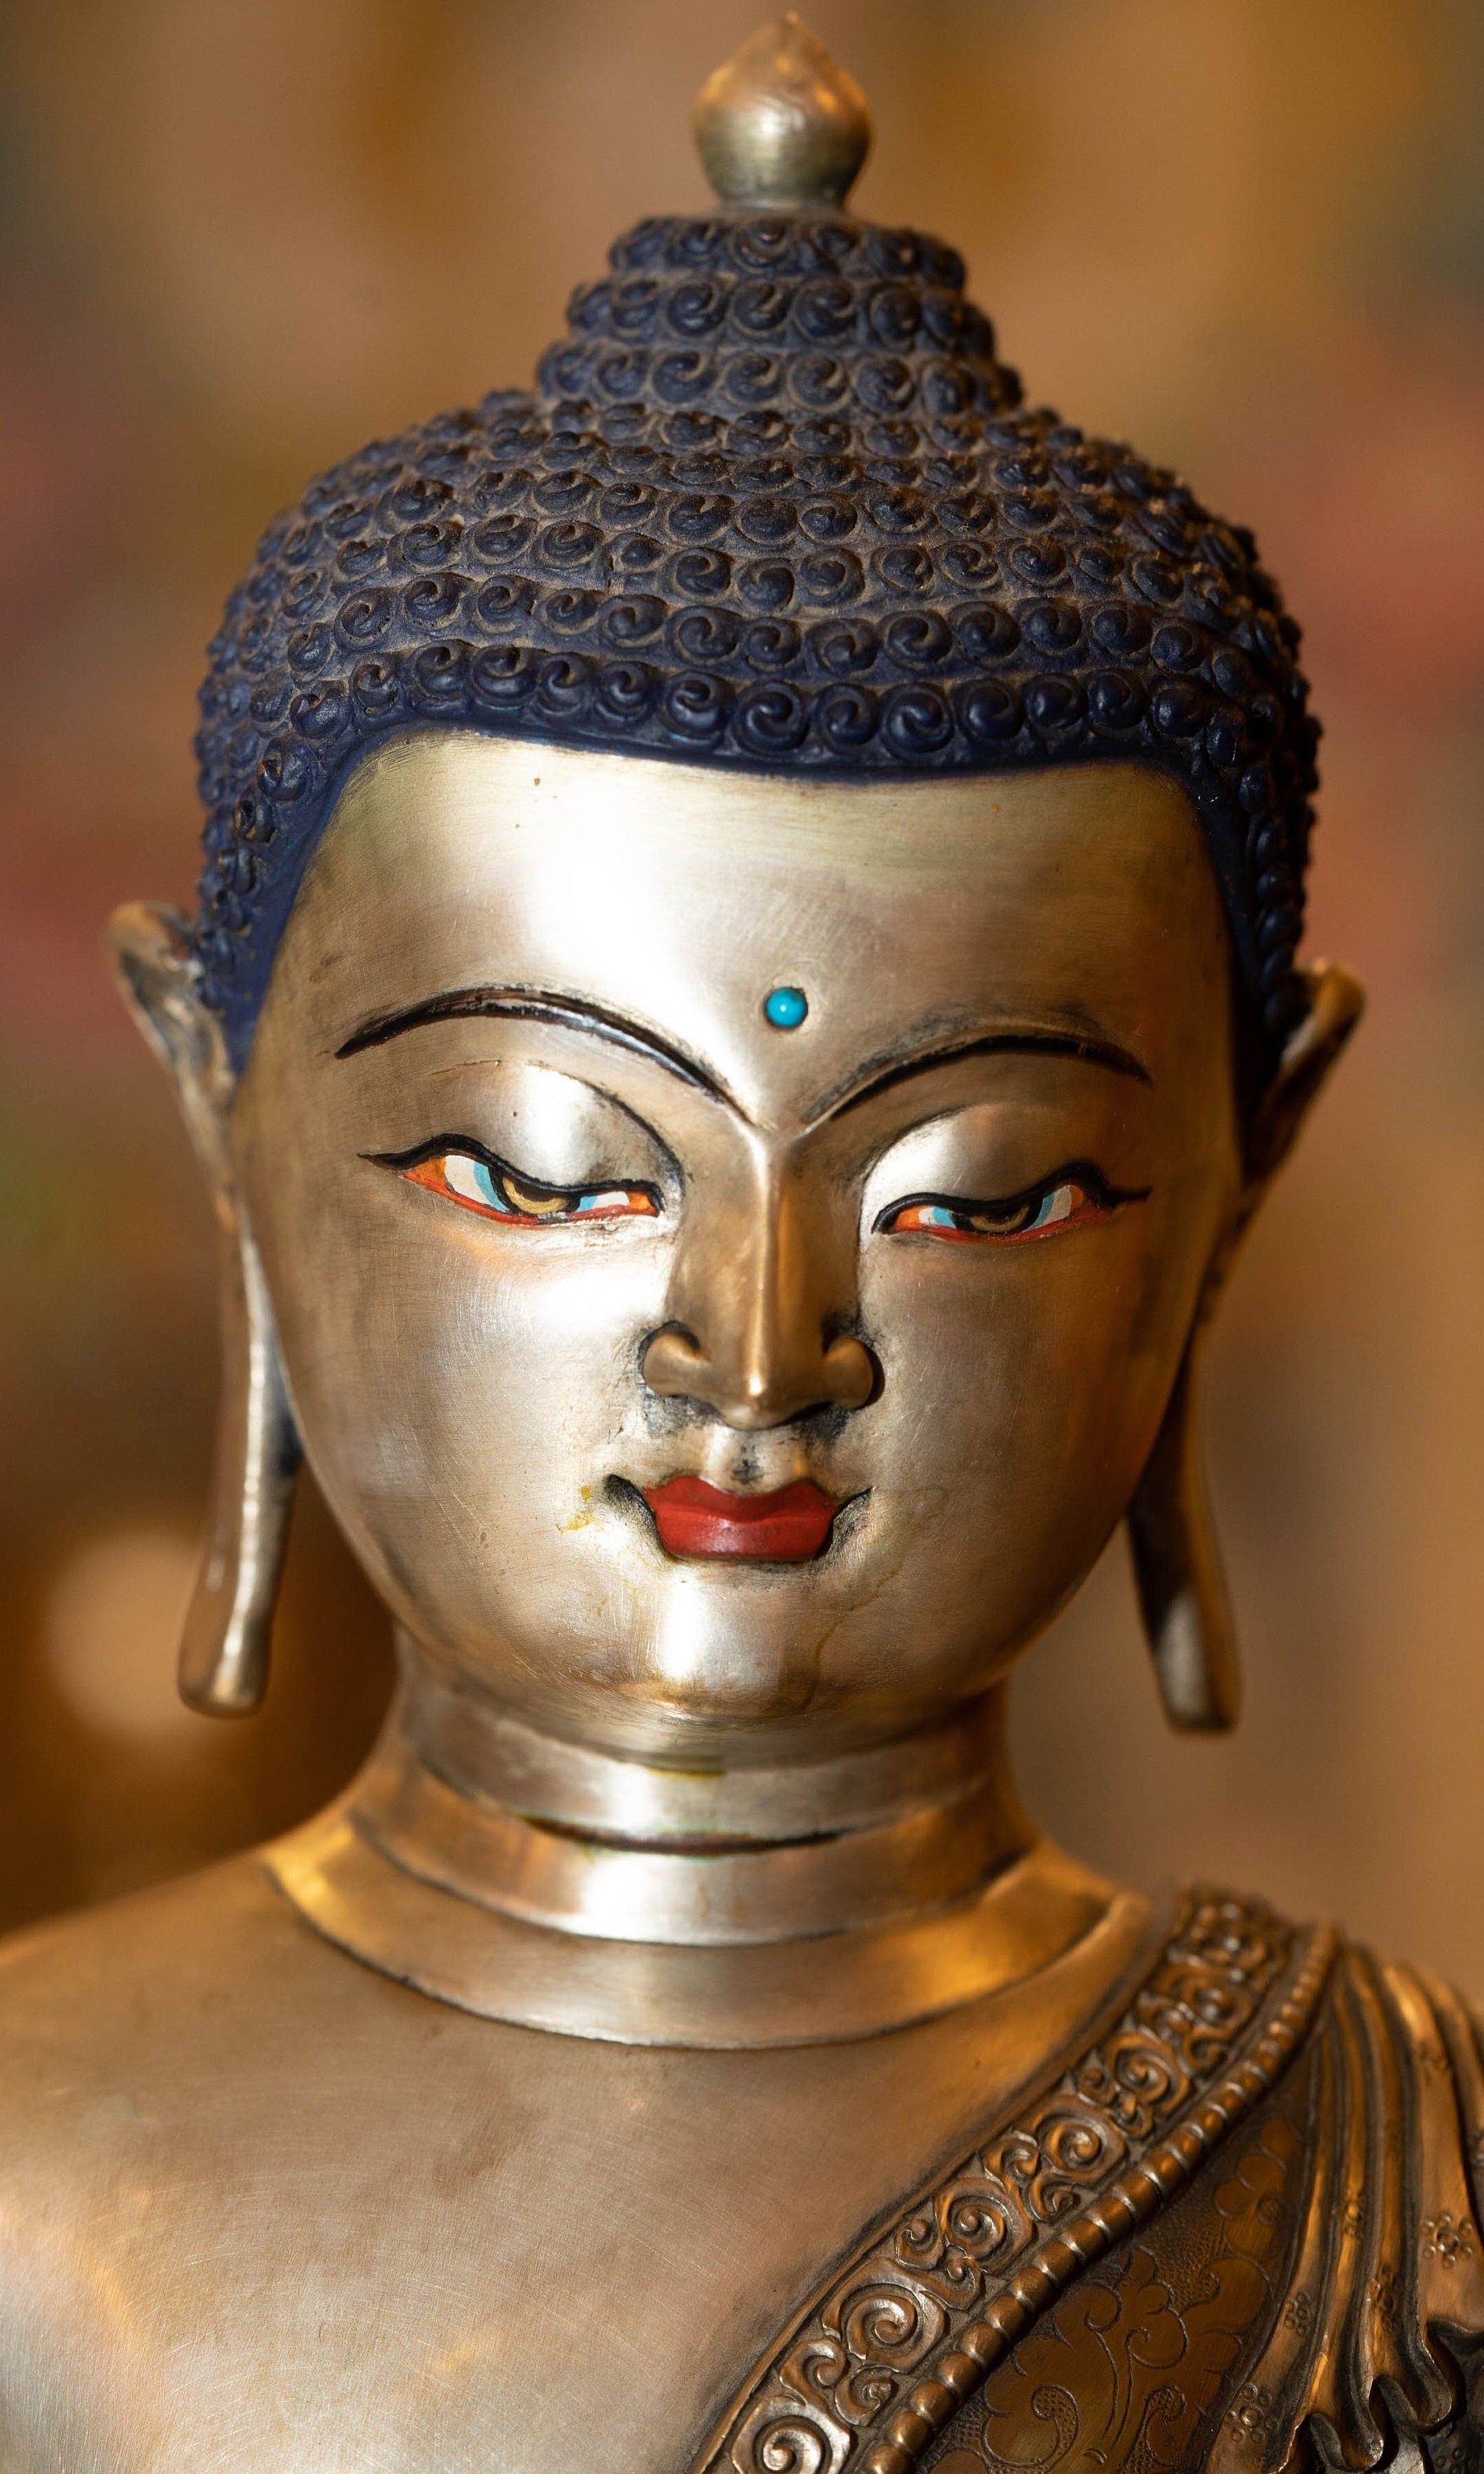 Silver Plated Shakyamuni Buddha Statue - Lucky Thanka